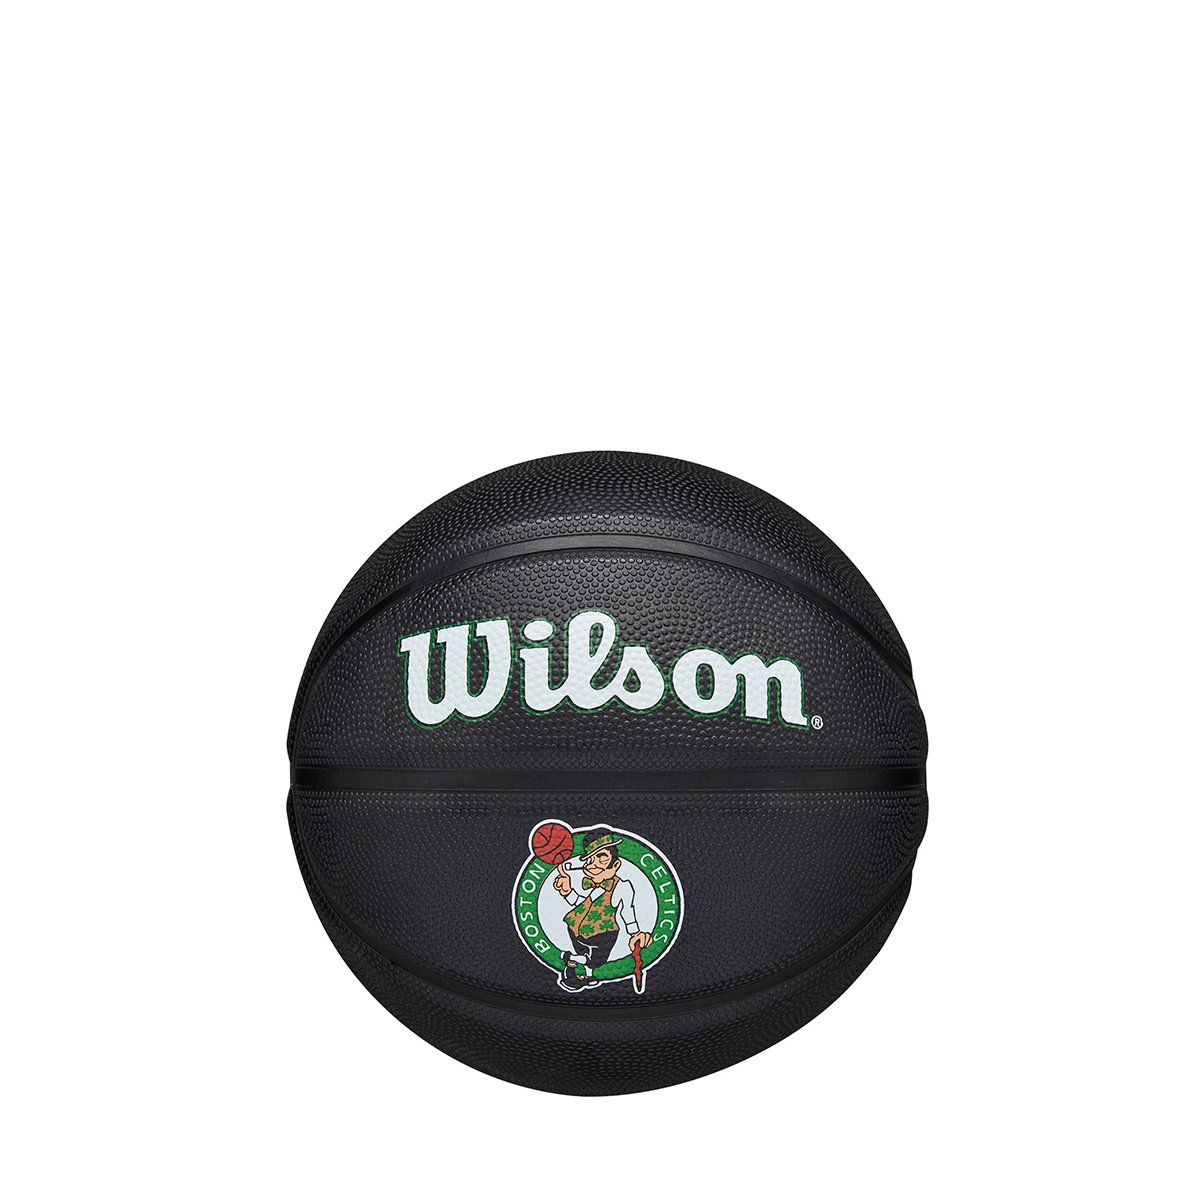 Image of Wilson NBA Boston Celtics Tribute Mini Basketball, Silver